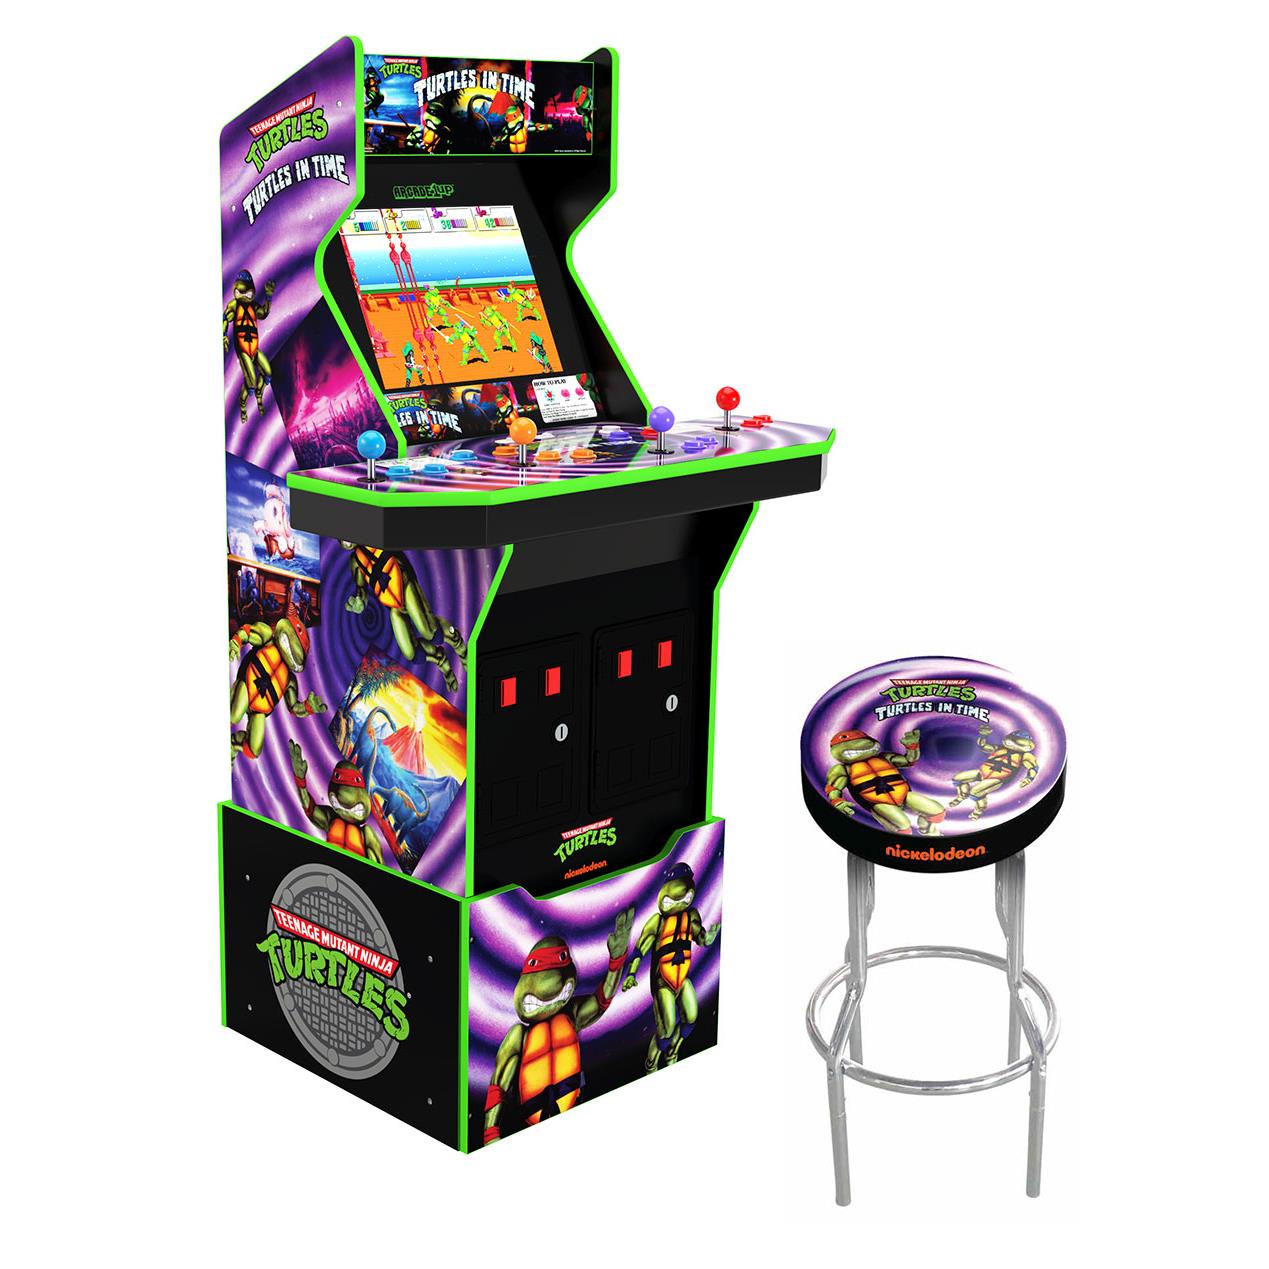 arcade1up teenage mutant ninja turtles edition arcade cabinet with exclusive licensed stool